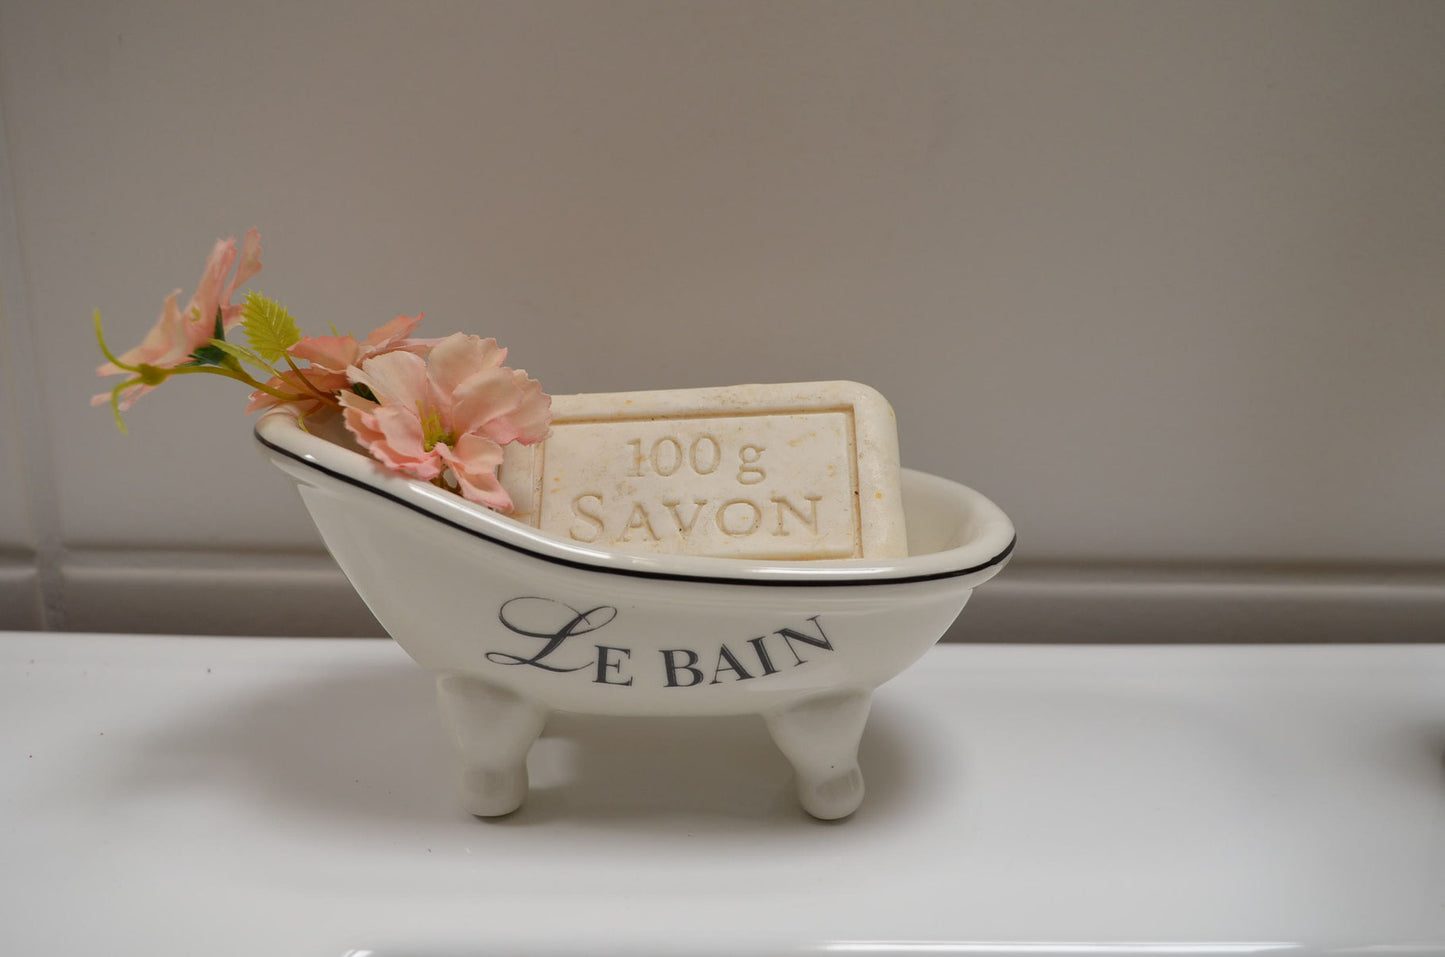 Parfait soap dish in nostalgic bathtub shape